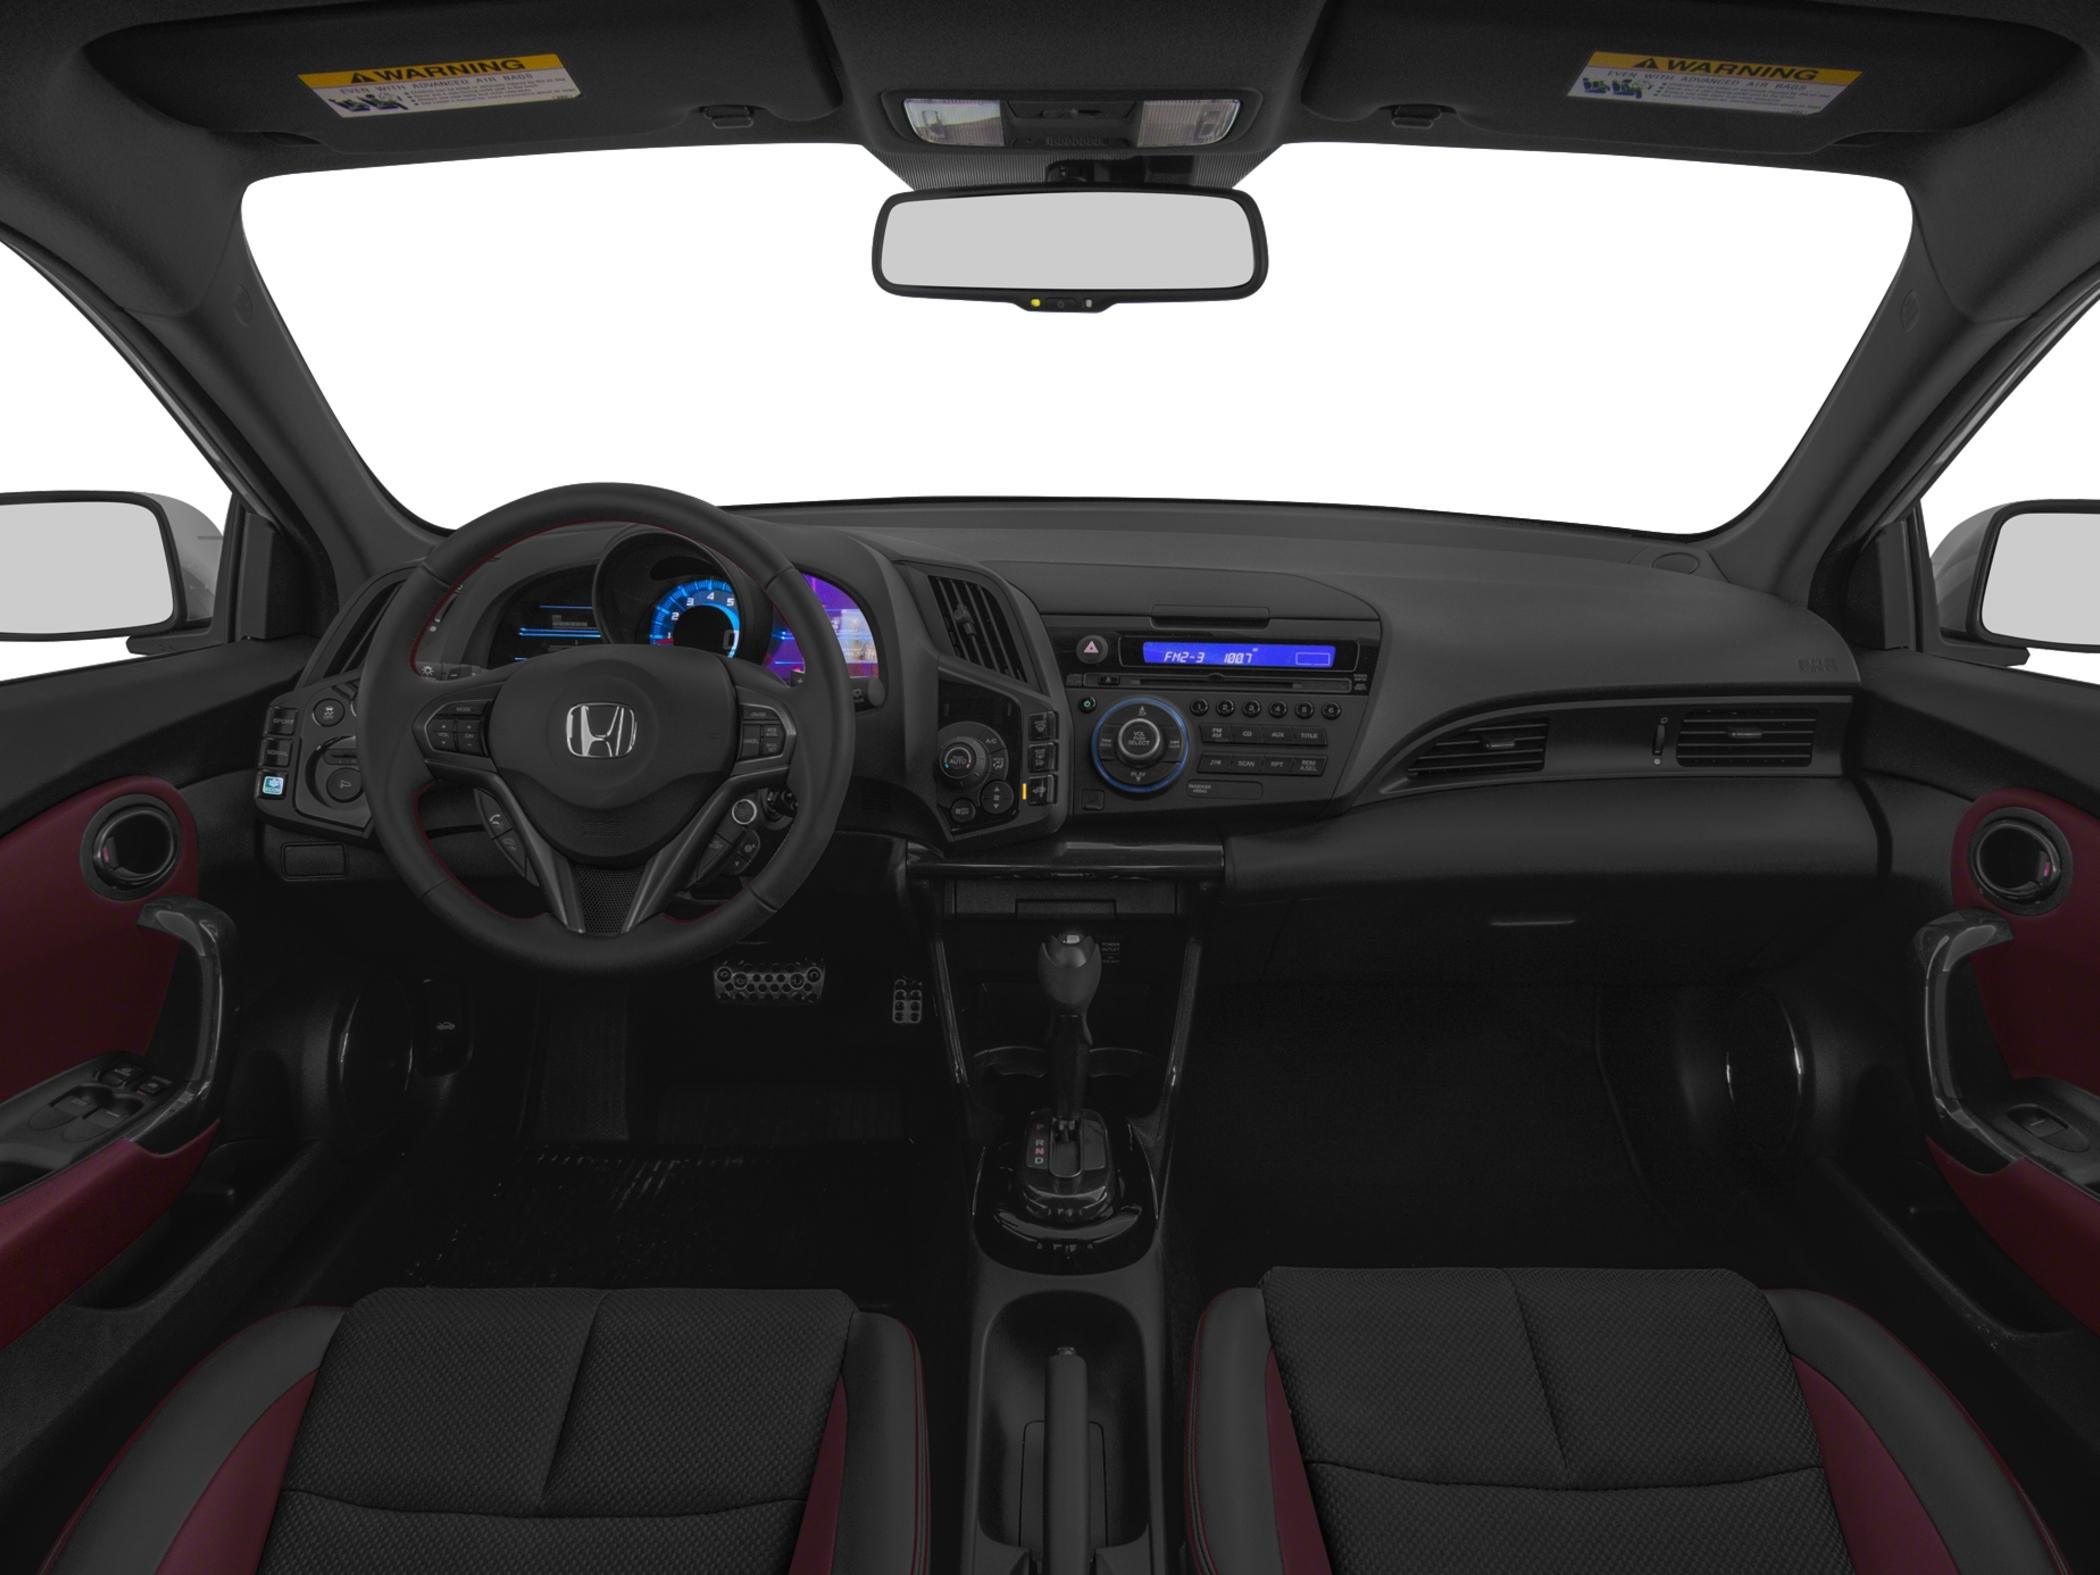 2015 Honda CR-Z Reviews, Price, MPG and More | Capital One Auto Navigator